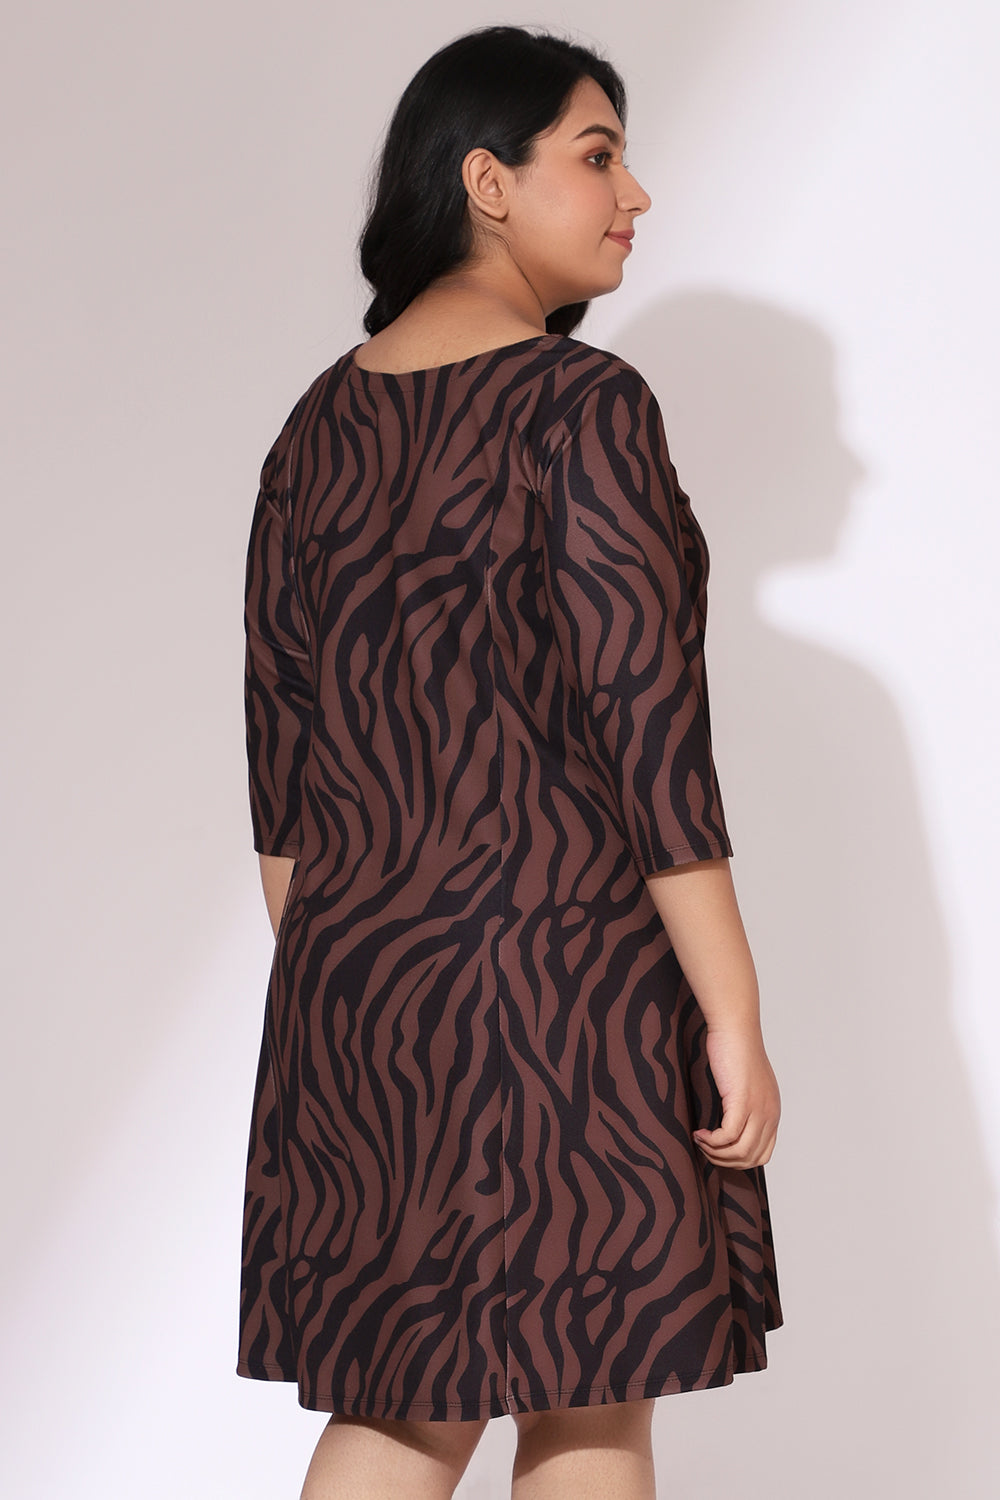 Comfortable Bronze Tiger Printed Dress